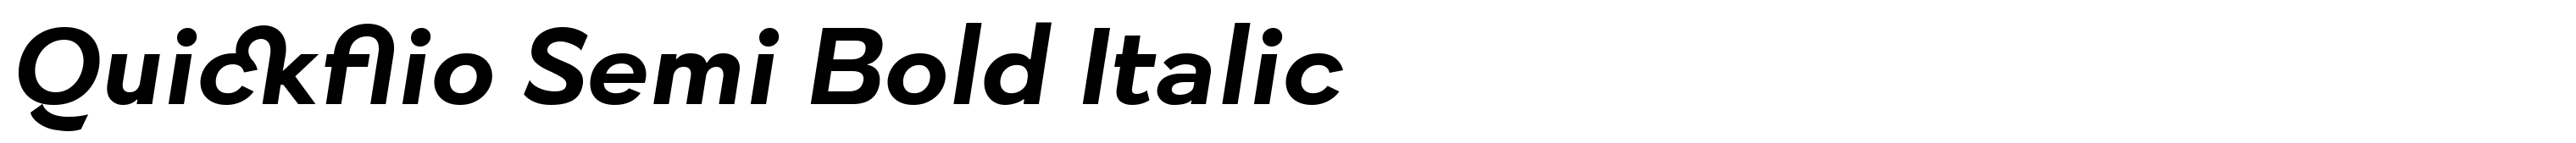 Quickflio Semi Bold Italic